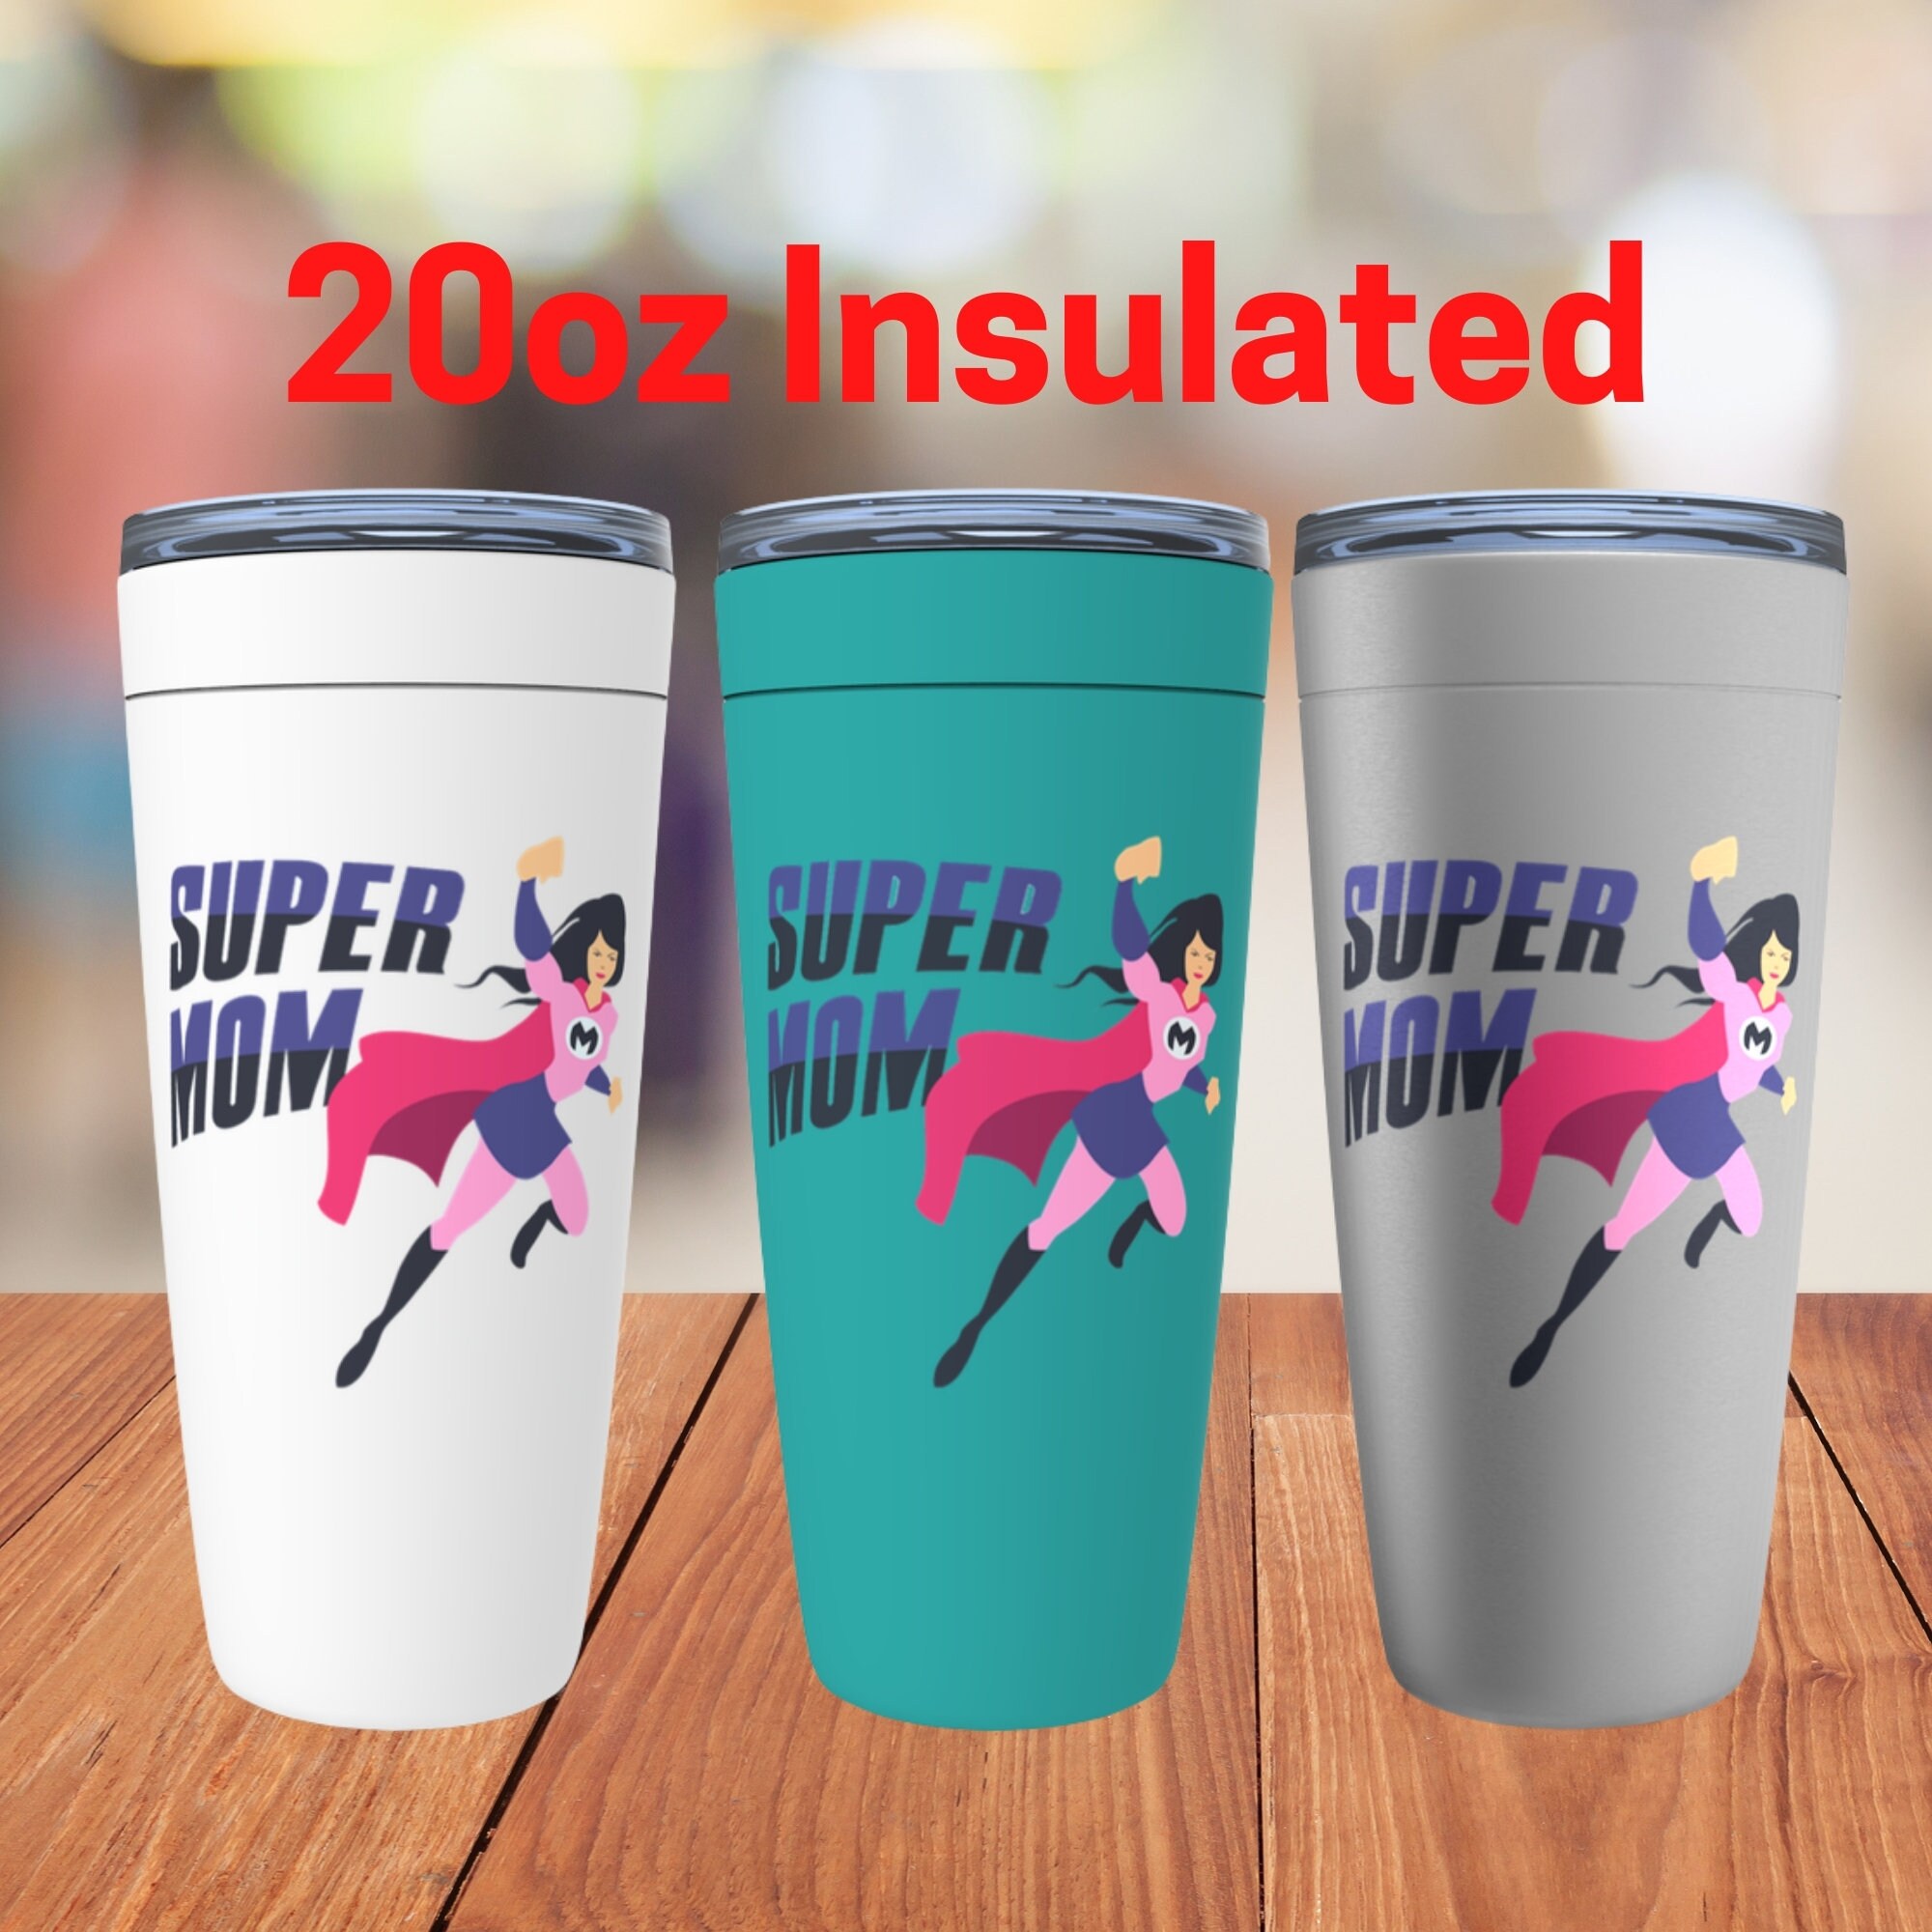 Creative Converting Cup, Superhero Slogans, 12 Ounce